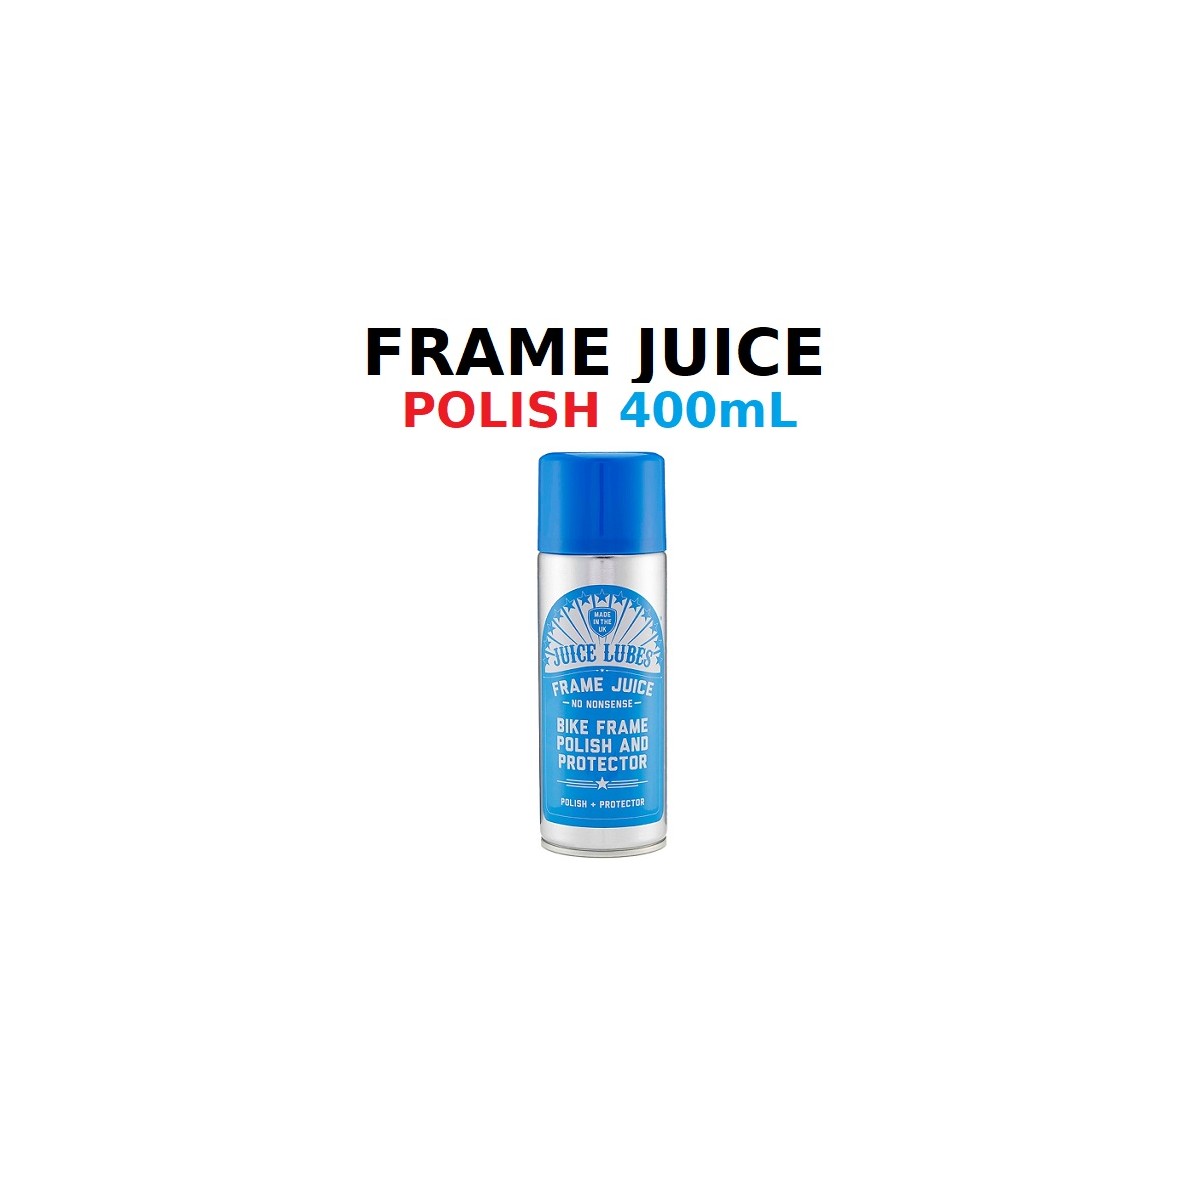 SPRAY POLISH - Frame juice